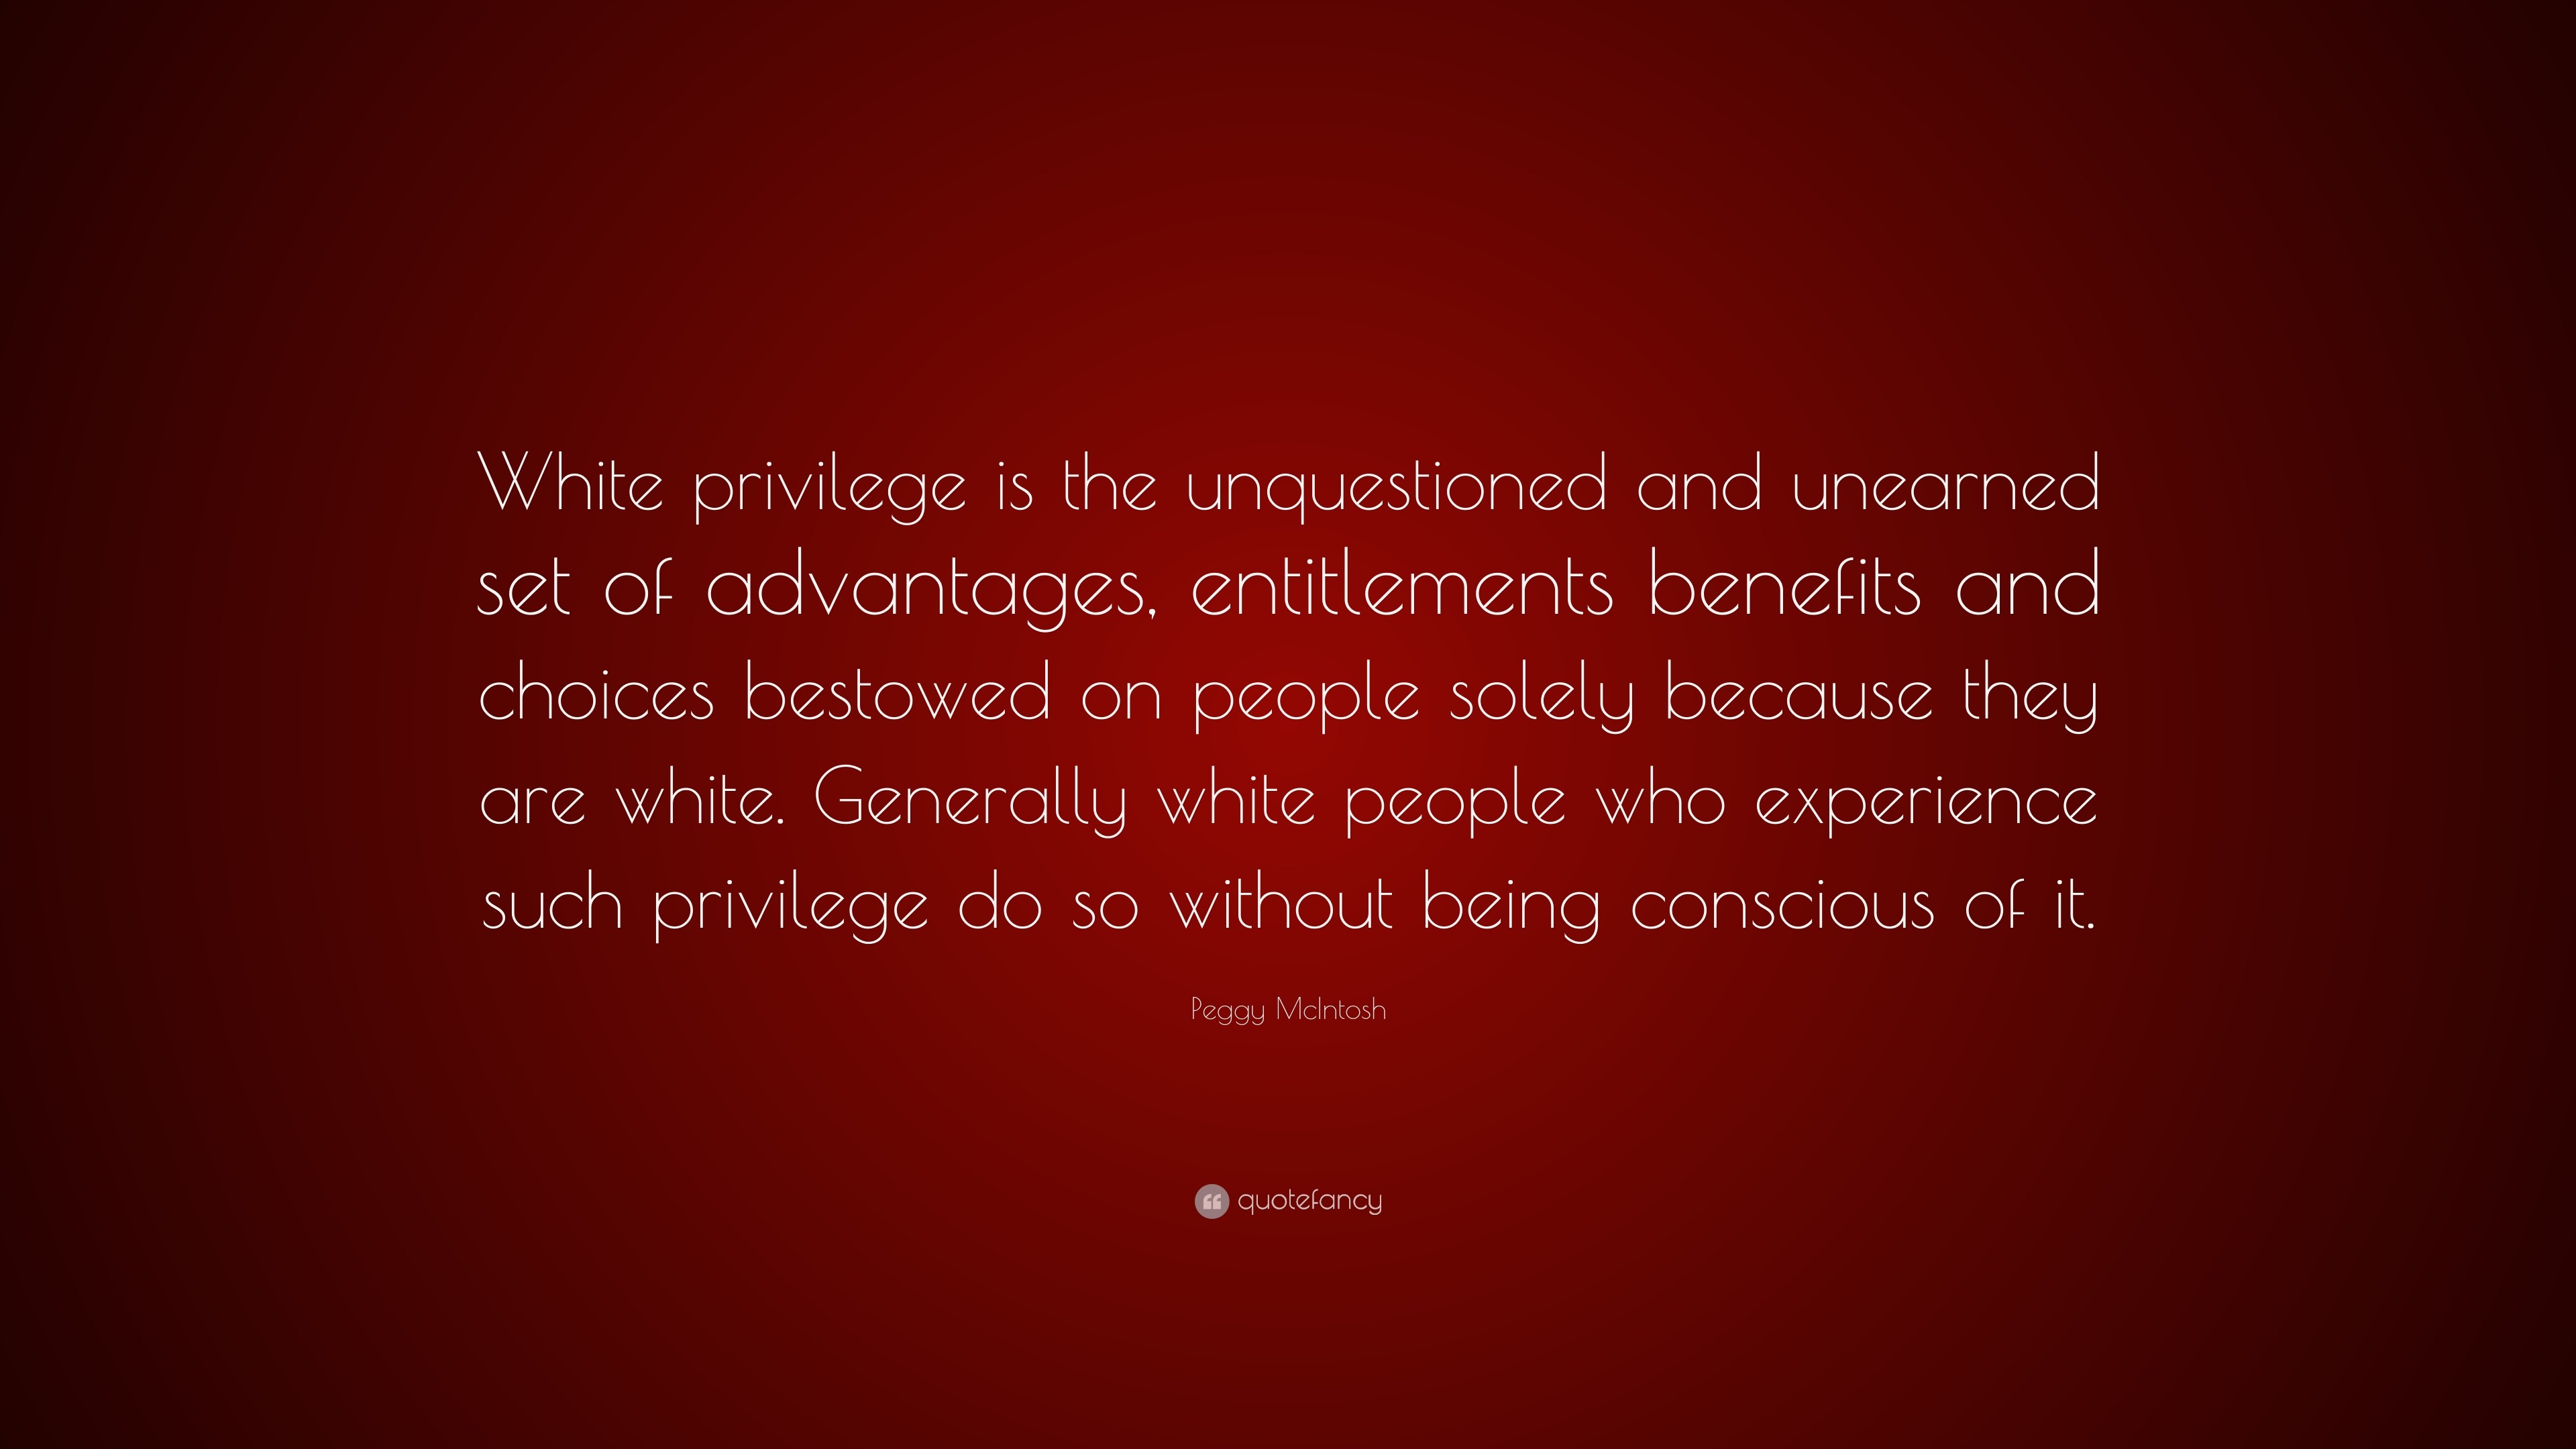 Quotes about white privilege